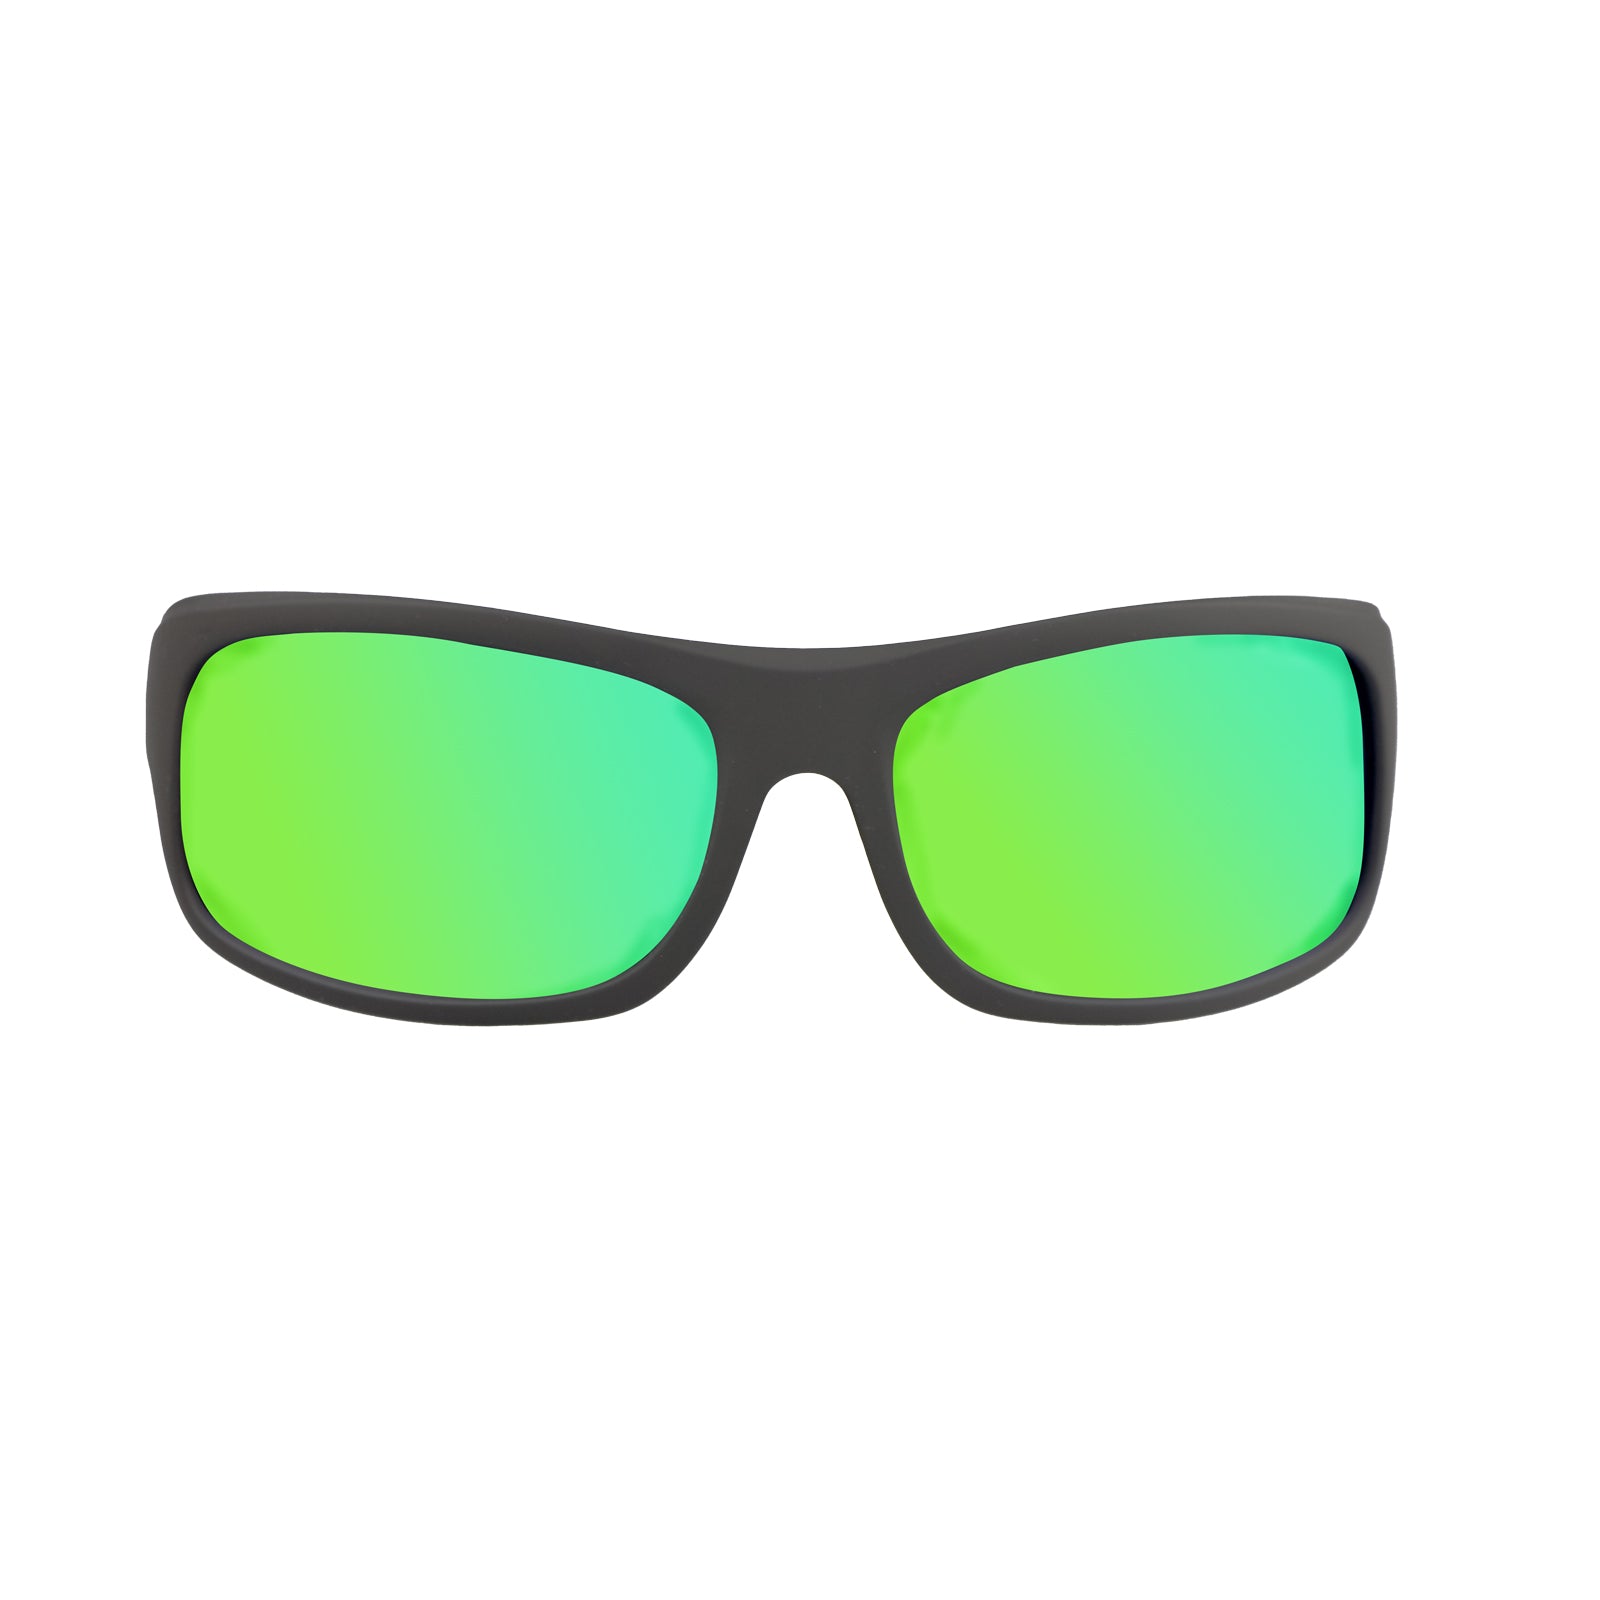 Sonnenbrille Erebos Extra Dunkel Kategorie 4 , L Grün verspiegelt